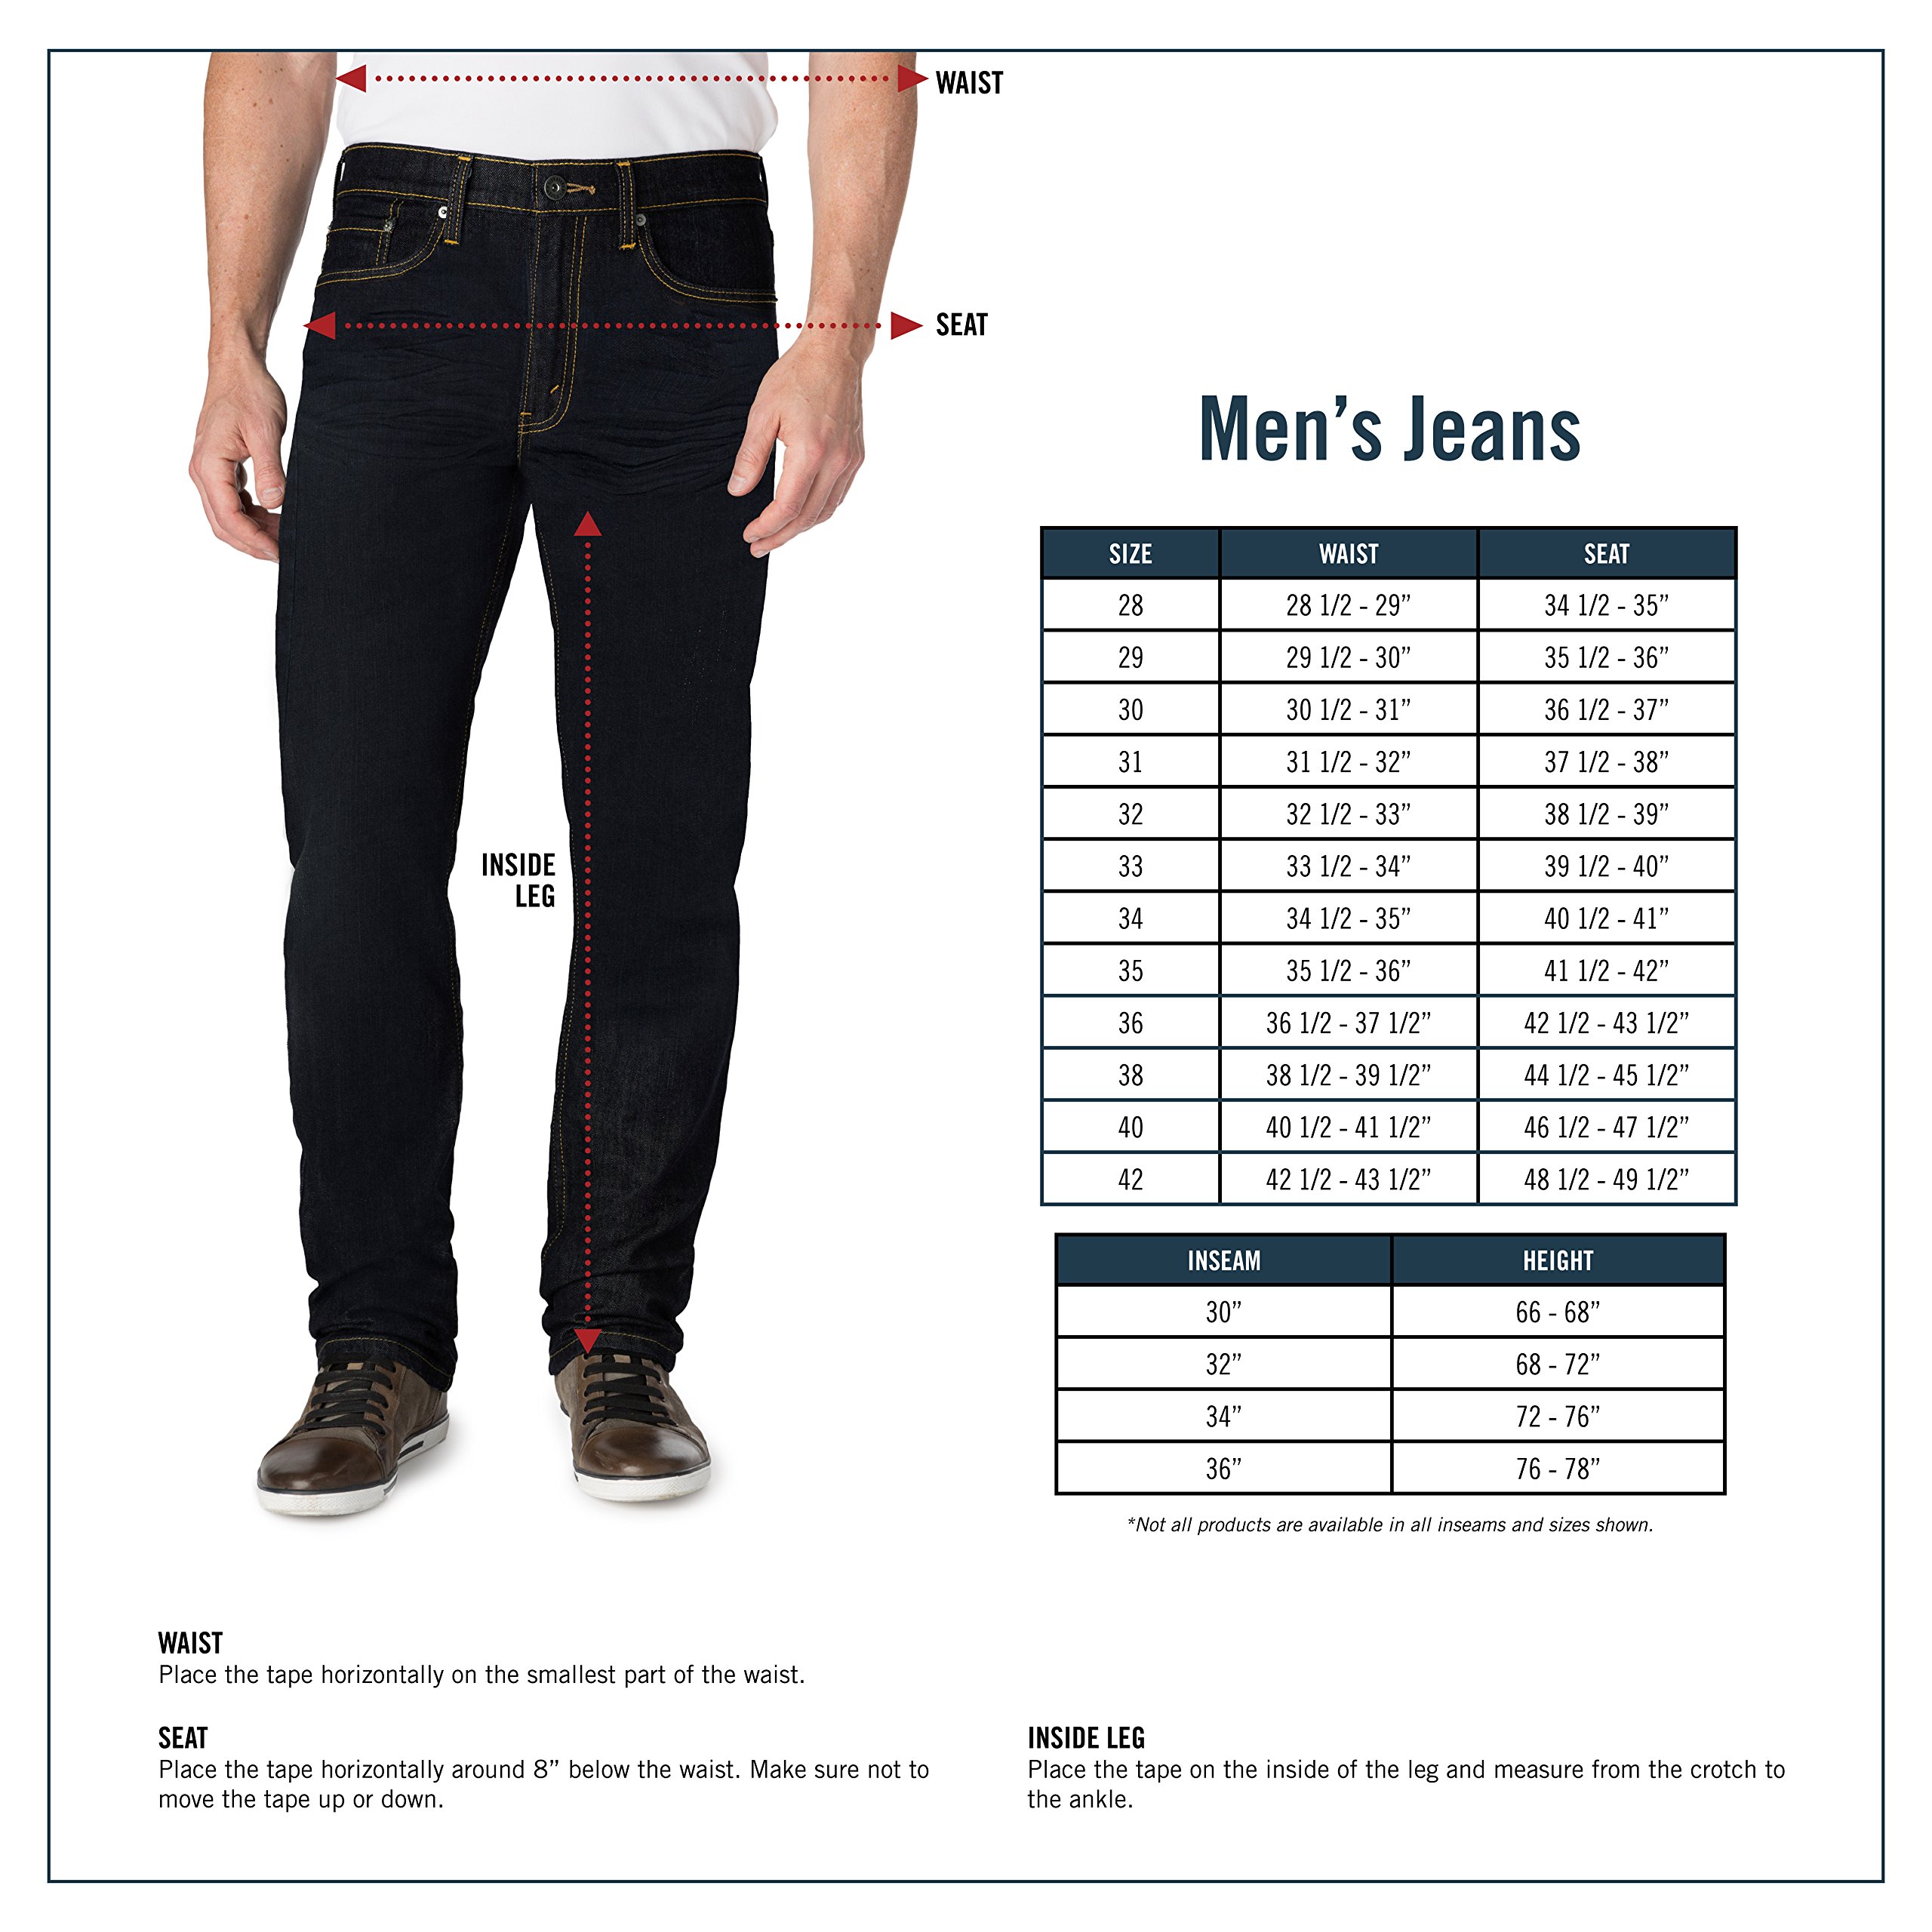 размер джинс для мужчины